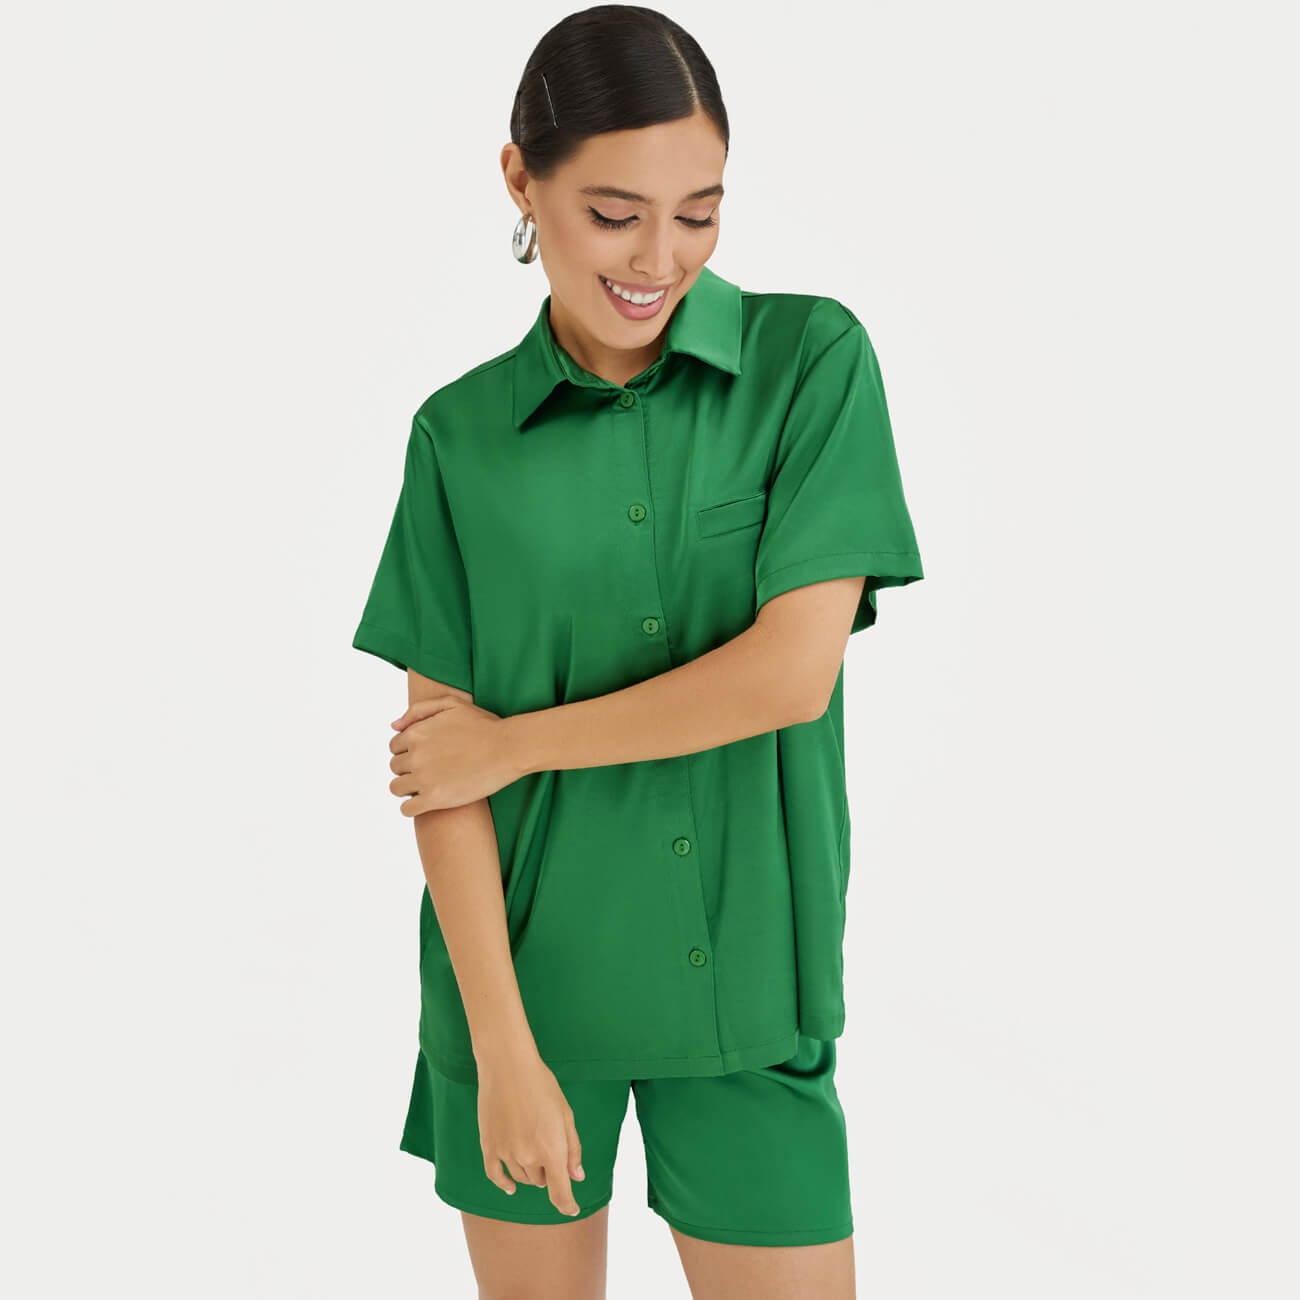 Рубашка женская, р. XL, с коротким рукавом, полиэстер/эластан, зеленая, Madeline рубашка женская домашняя р s с коротким рукавом полиэстер эластан серая ирисы mary